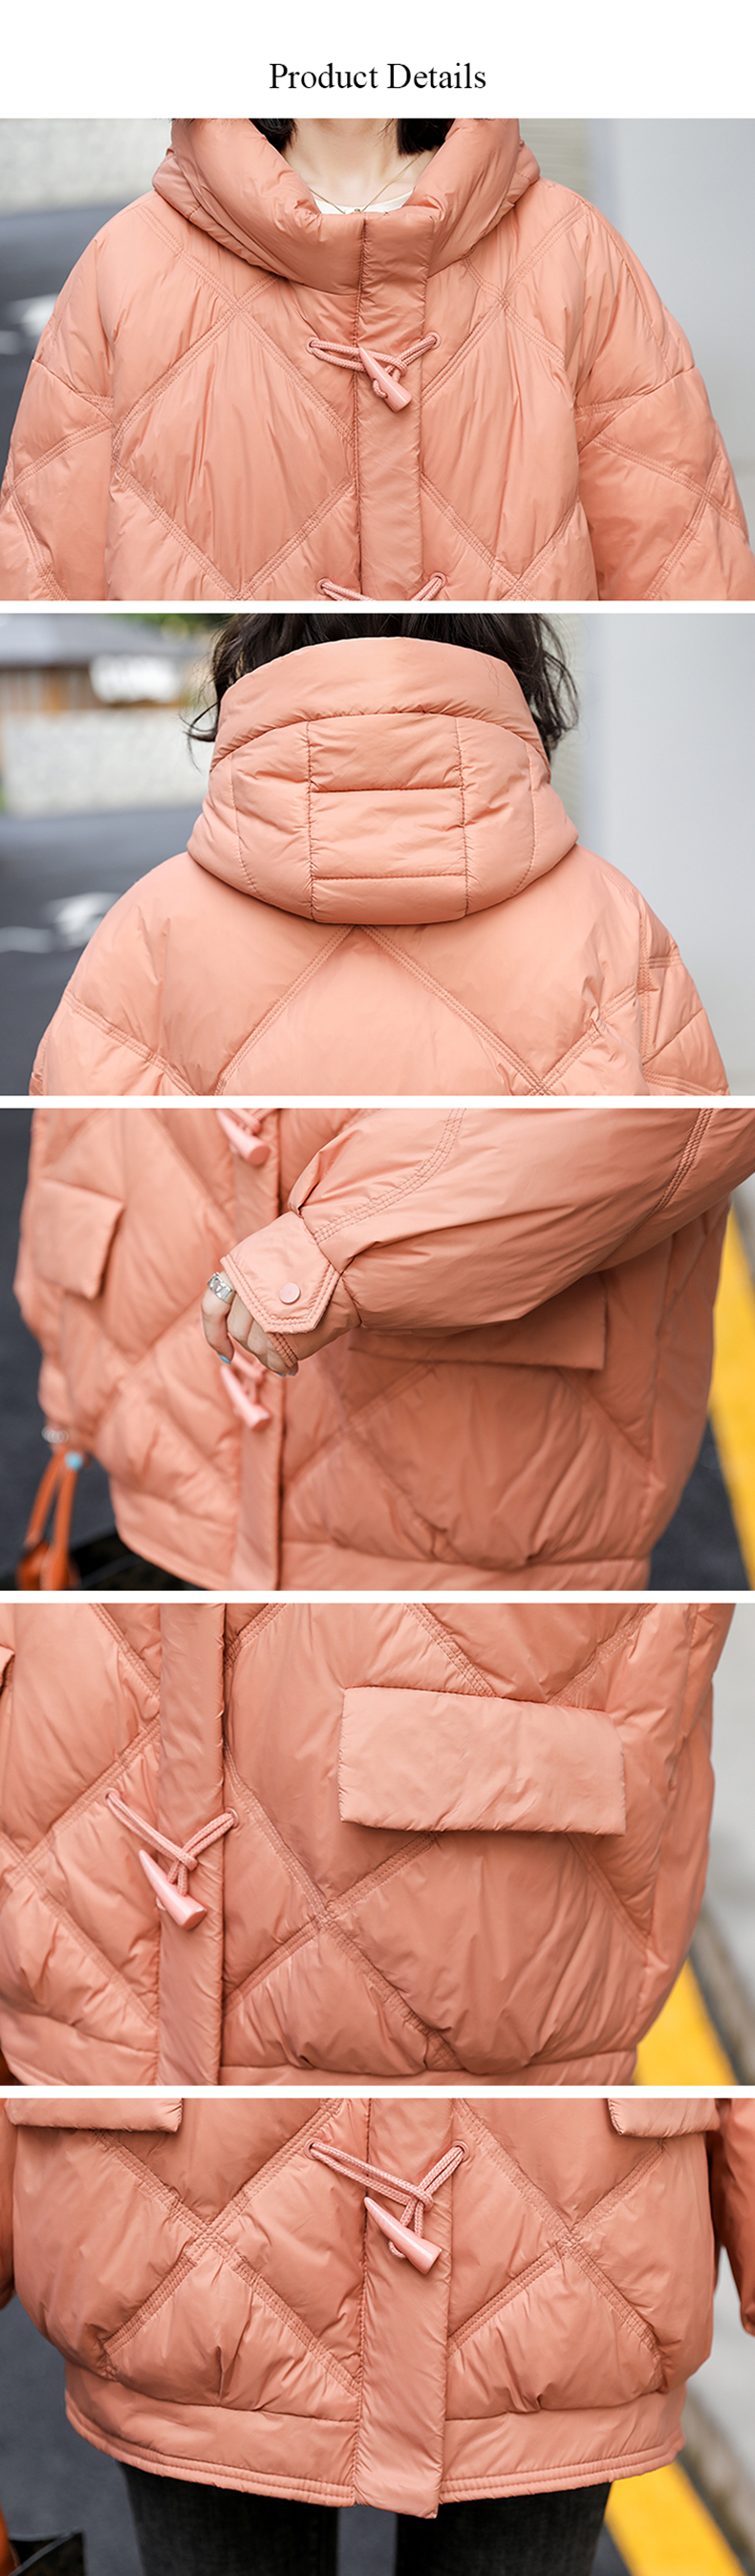 Women's Warm Puffer Jackets with Hood Cozy Down Parka Coat17